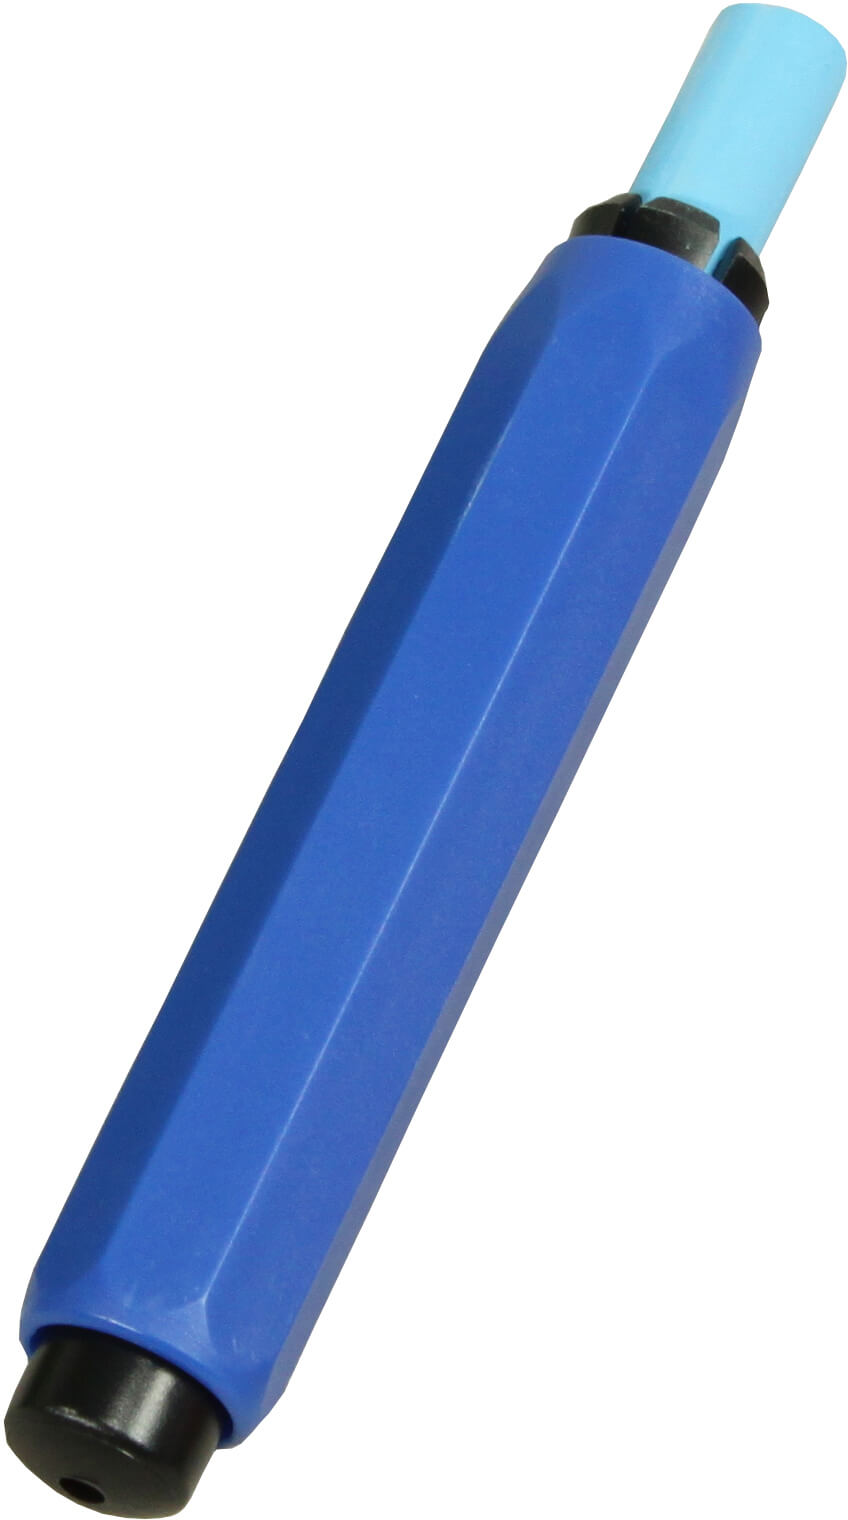 Kreidehalter für Robercolorkreide blau (1 Stück)